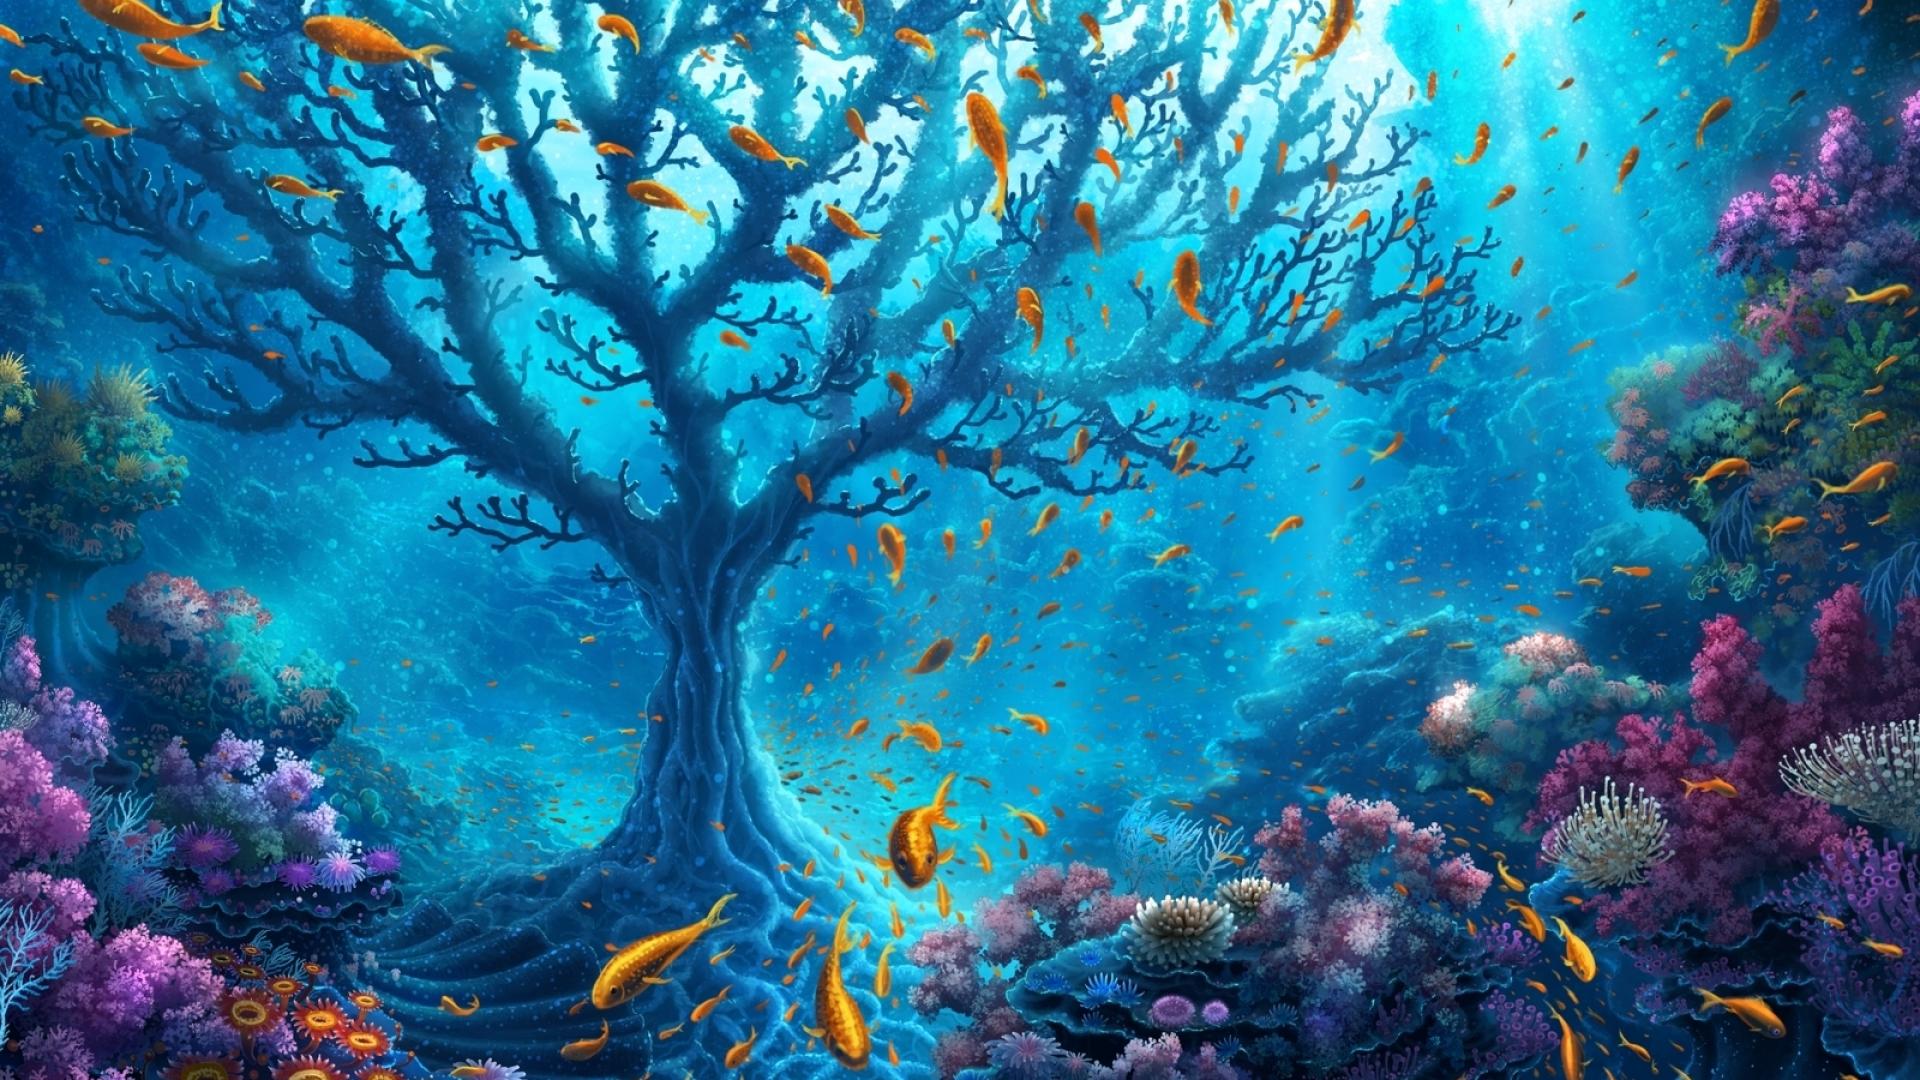 Underwater World Fantasy desktop PC and Mac wallpaper